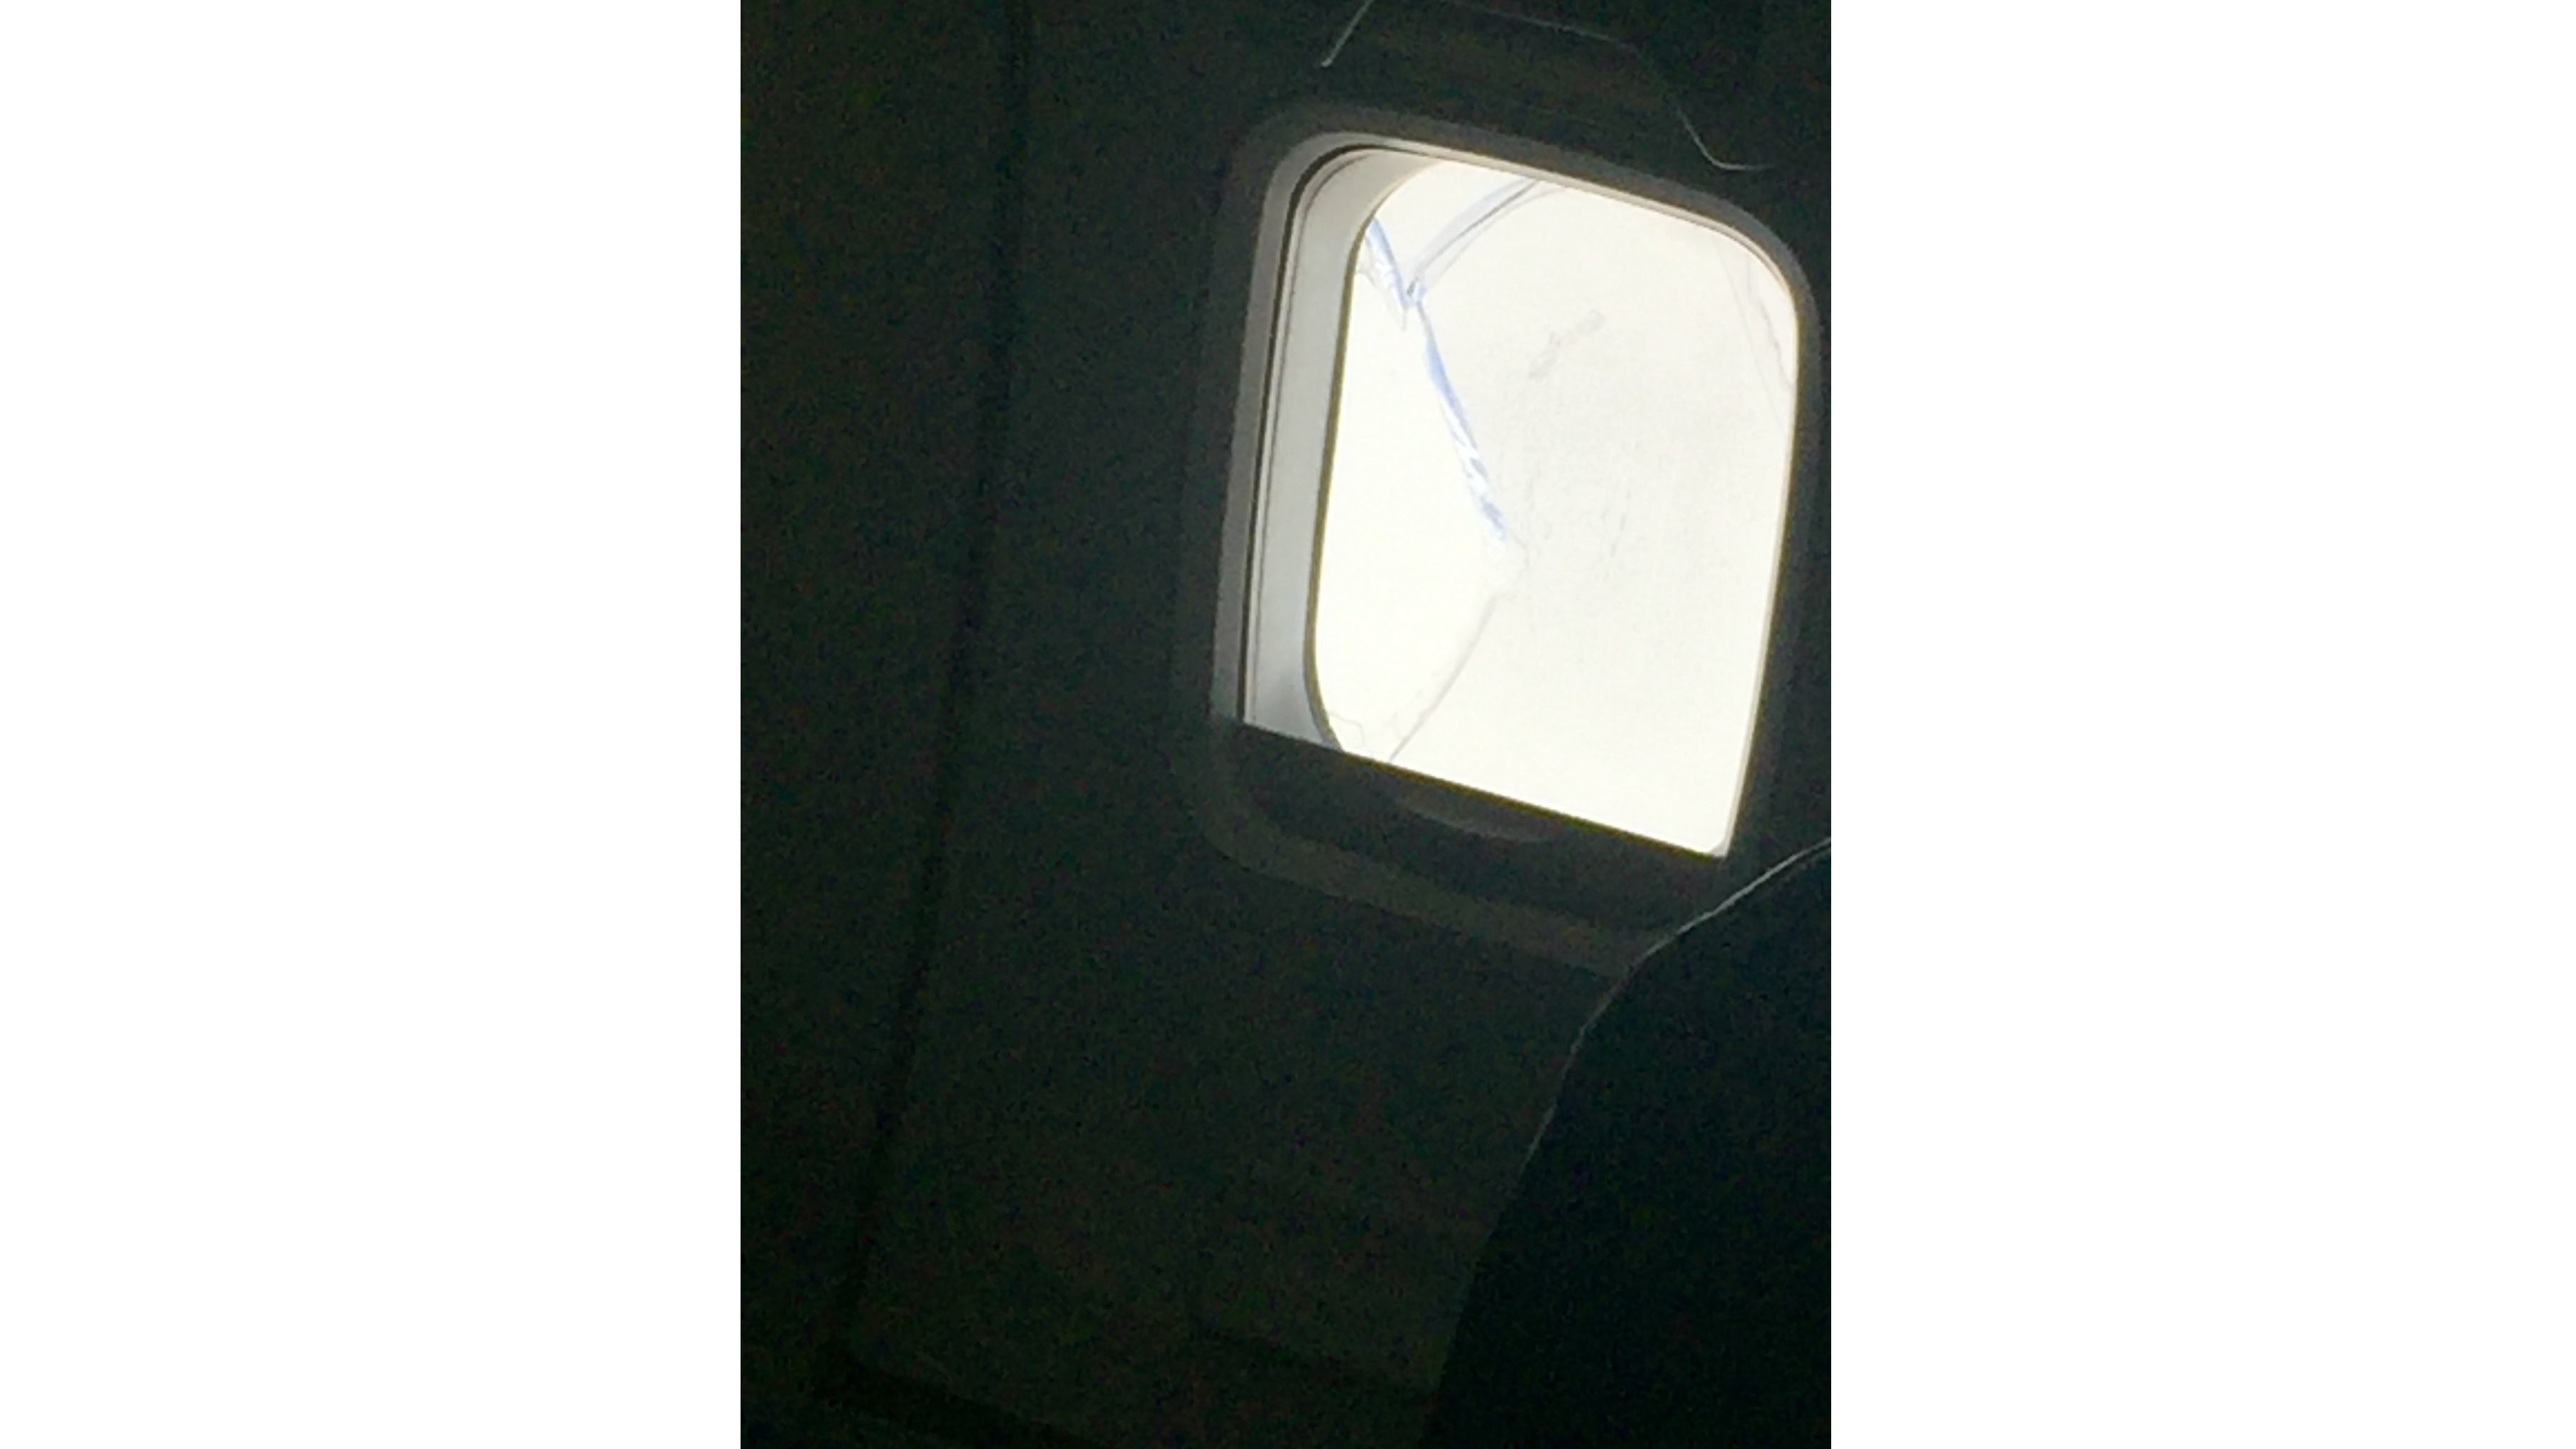 Vuelo de Southwest Airlines aterriza de emergencia con ventana rota